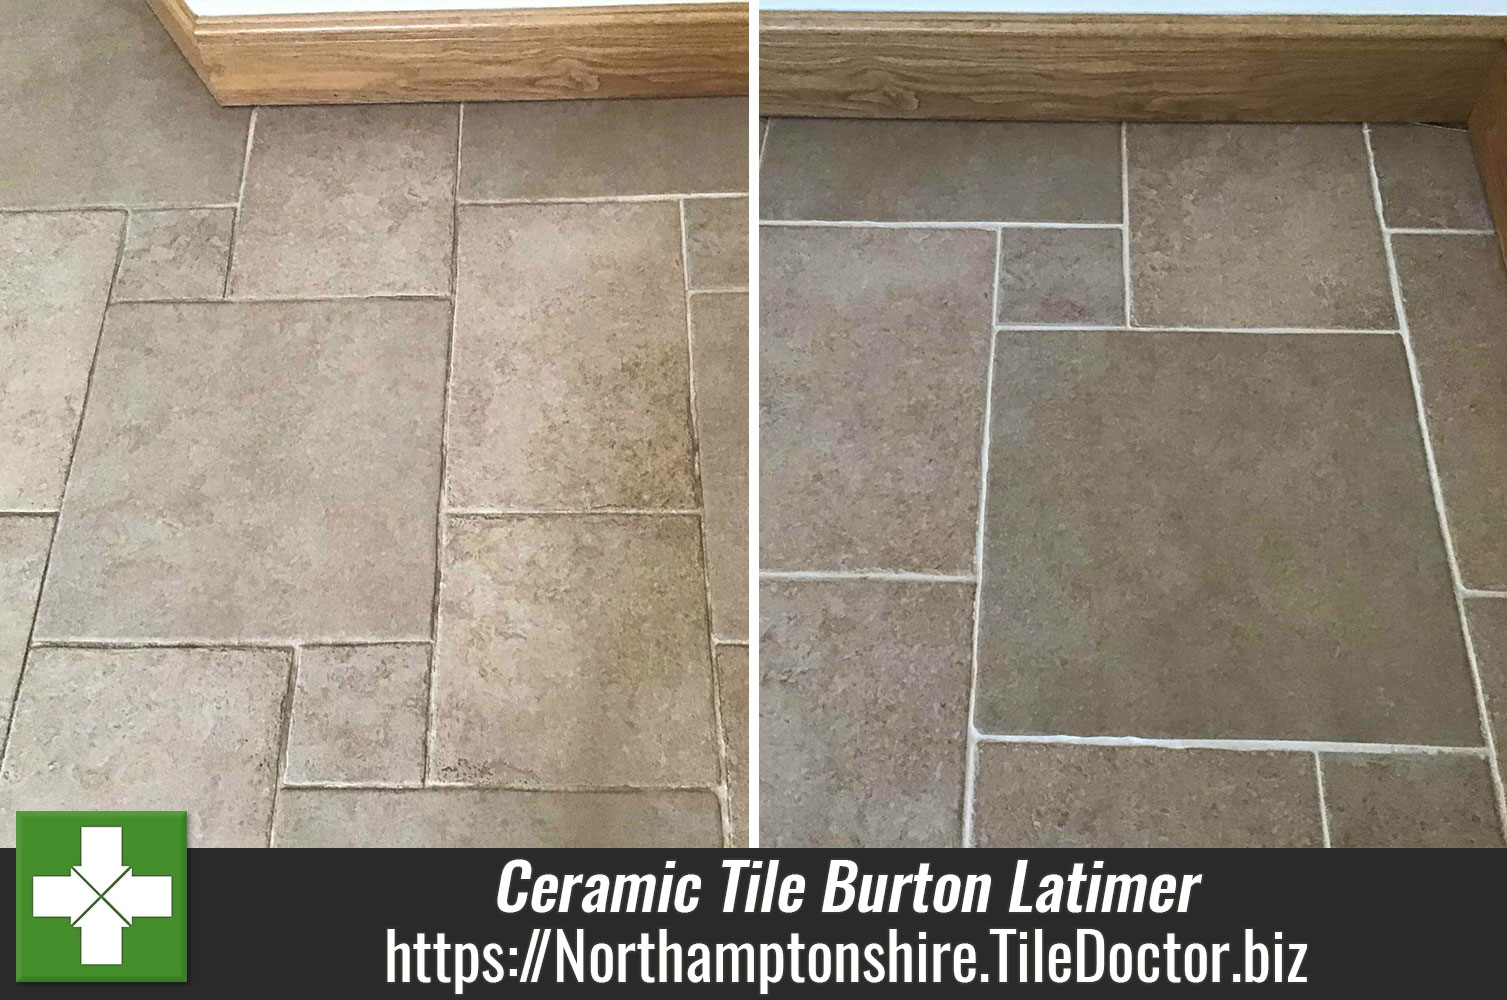 Ceramic-Tiled-Floor-Before-After-Tile-Grout-Cleaning-Burton-Latimer